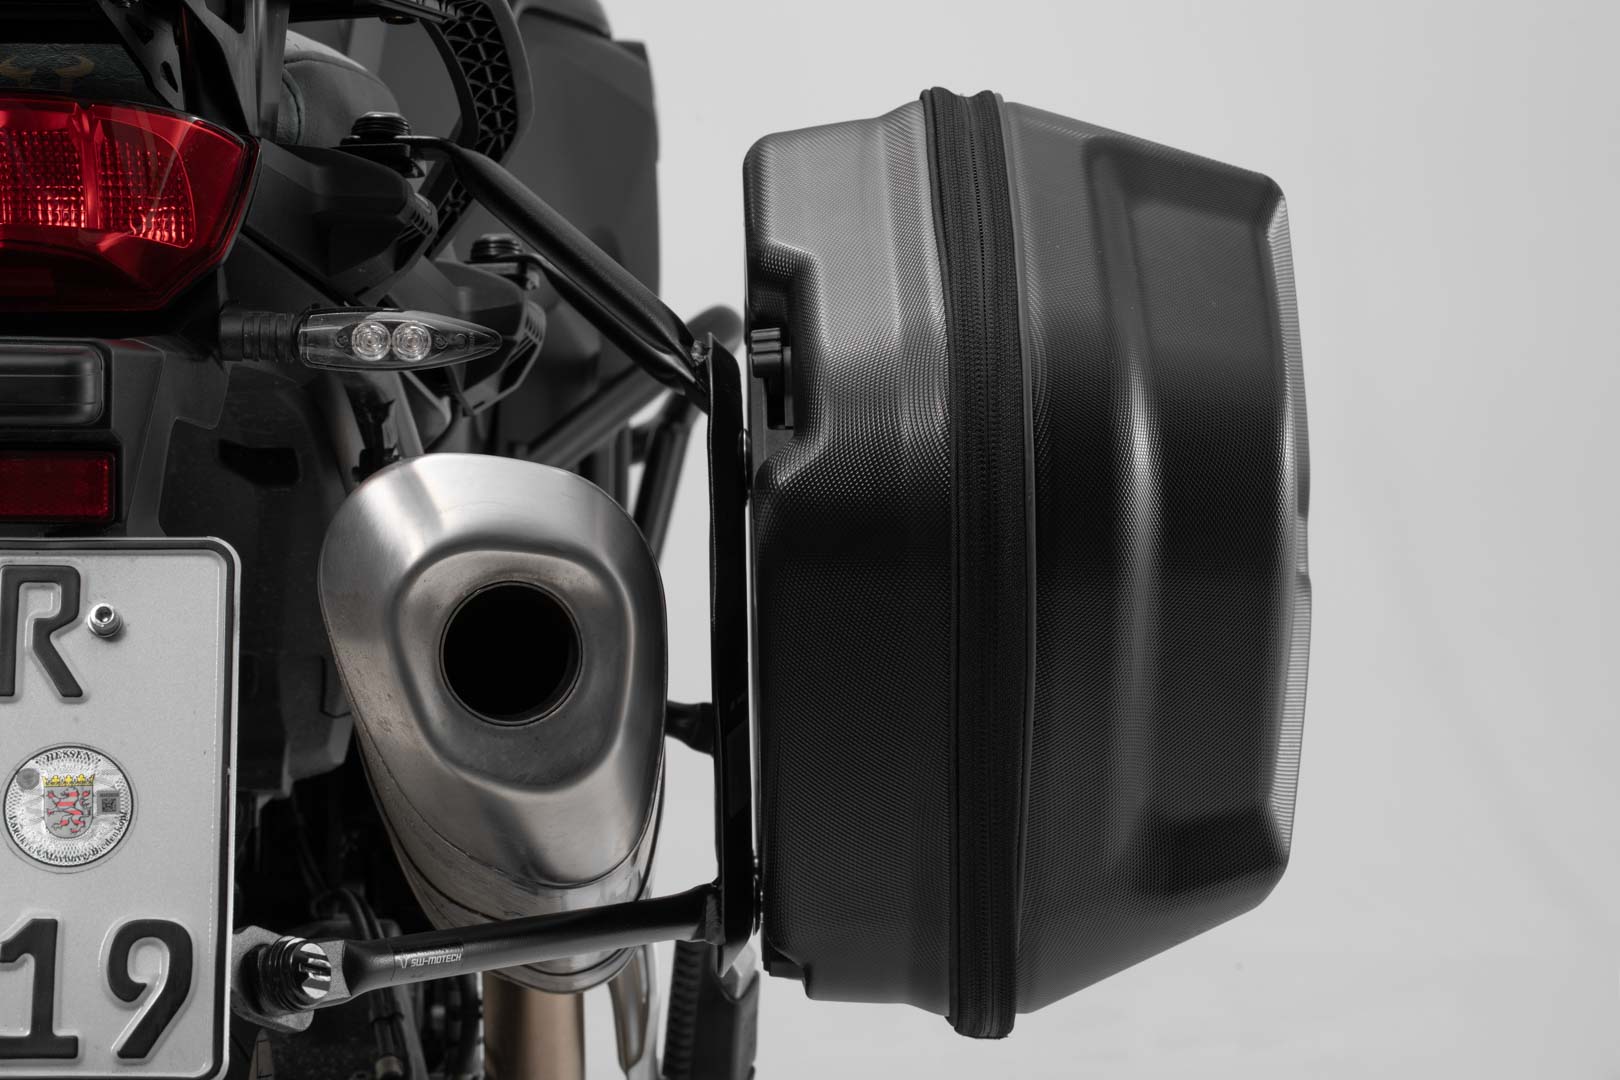 AERO ABS Side Case System 2x25 litre KTM 1290 Super Adventure (14-)